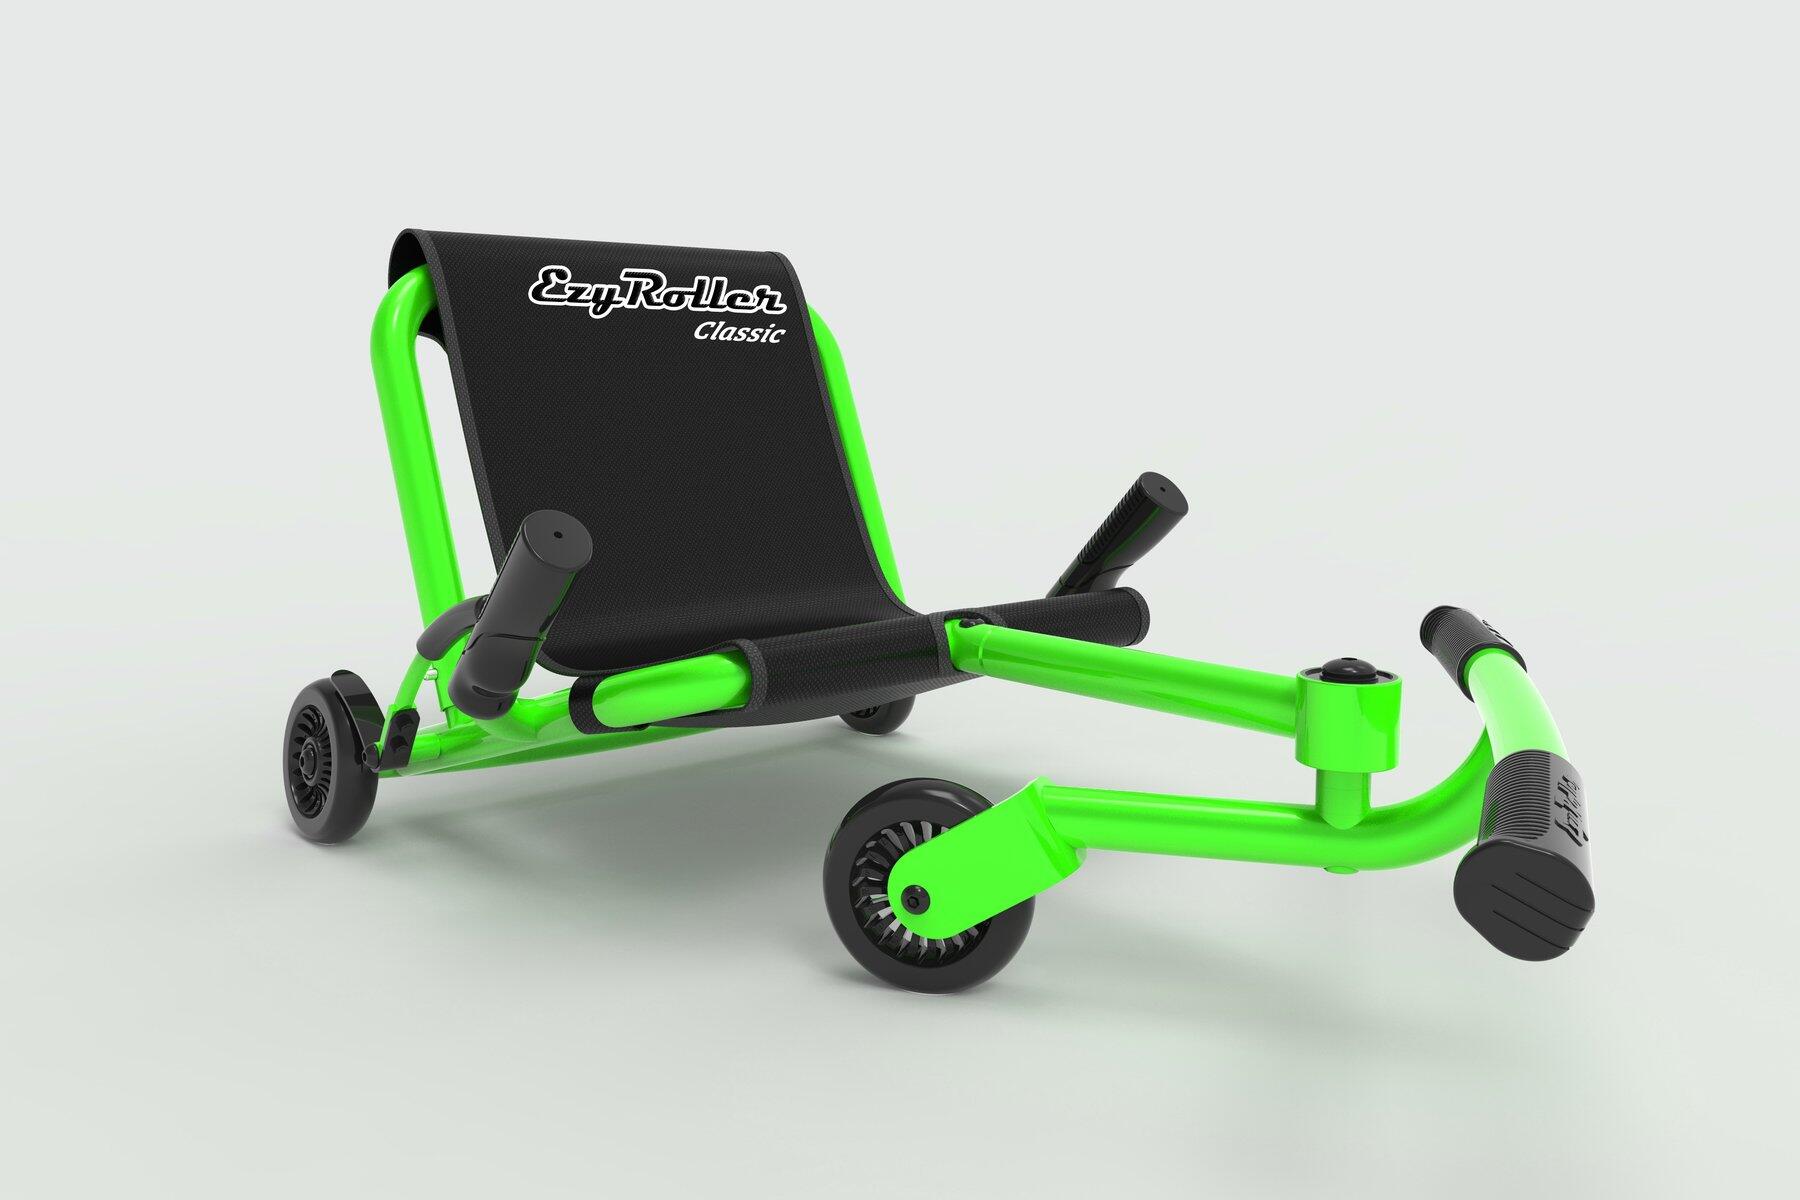 EZYROLLER Ezy Roller Classic Kids Kart Trike Weave Ride On - Lime Green